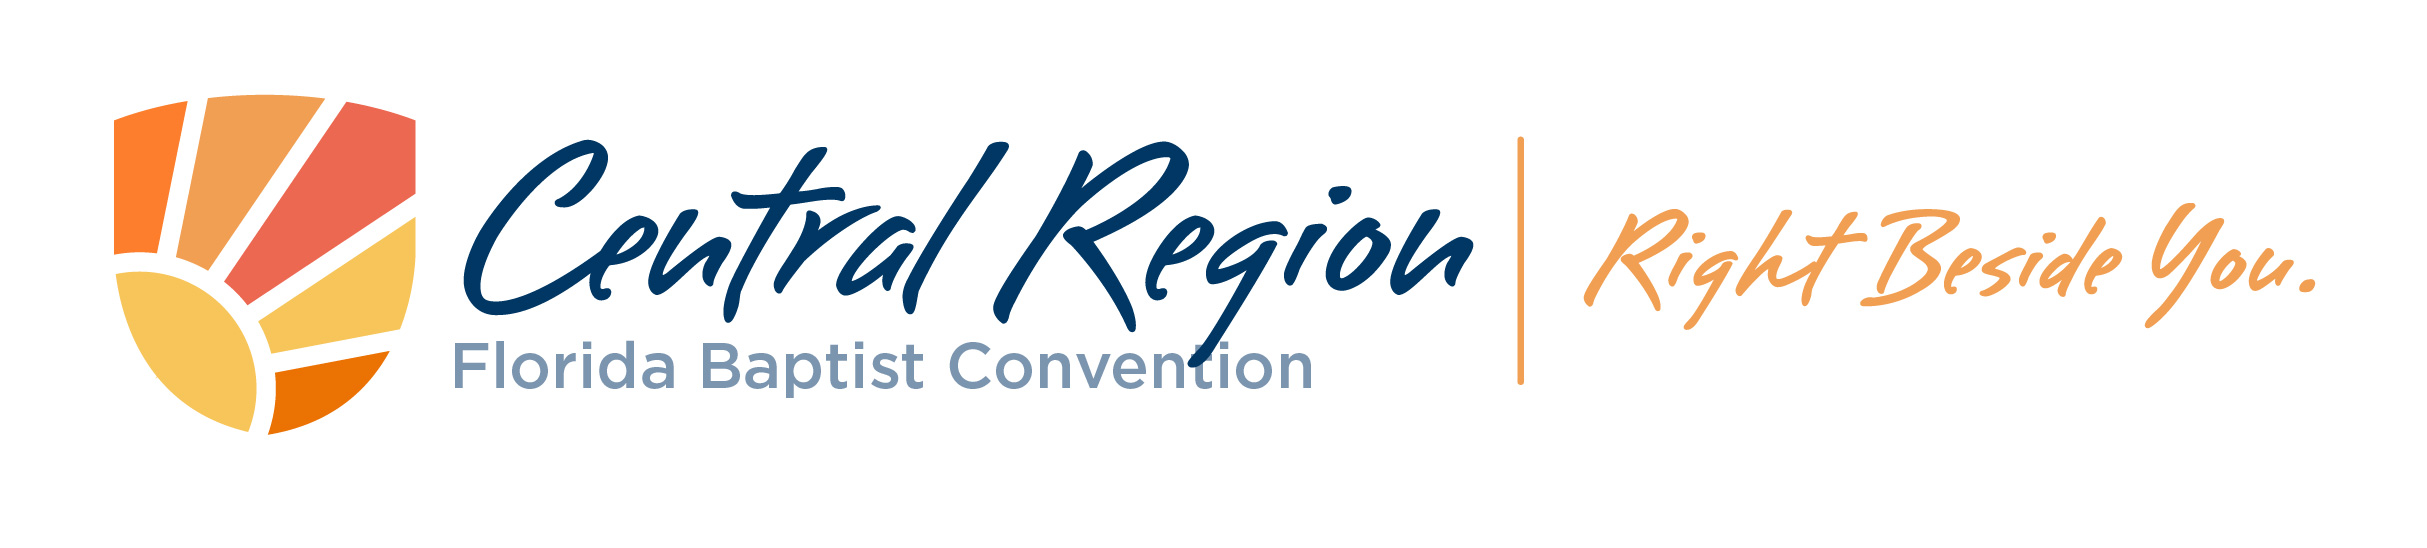 Florida Baptist Convention, Central Florida Region